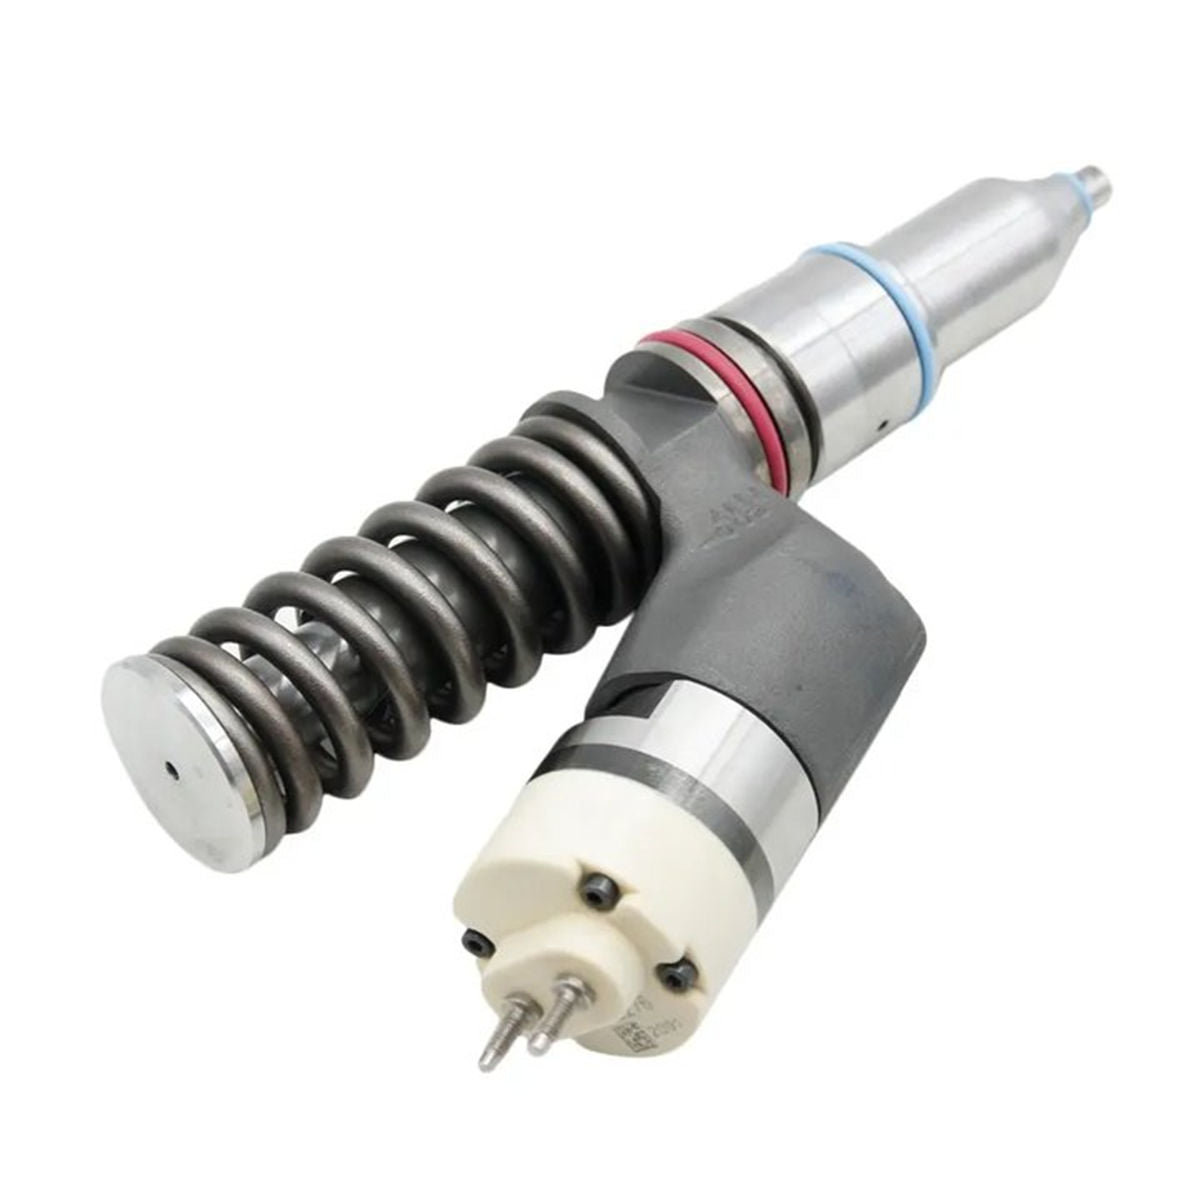 200-1117 2001117 Fuel Injector for Caterpillar C15 Diesel Engine - Sinocmp